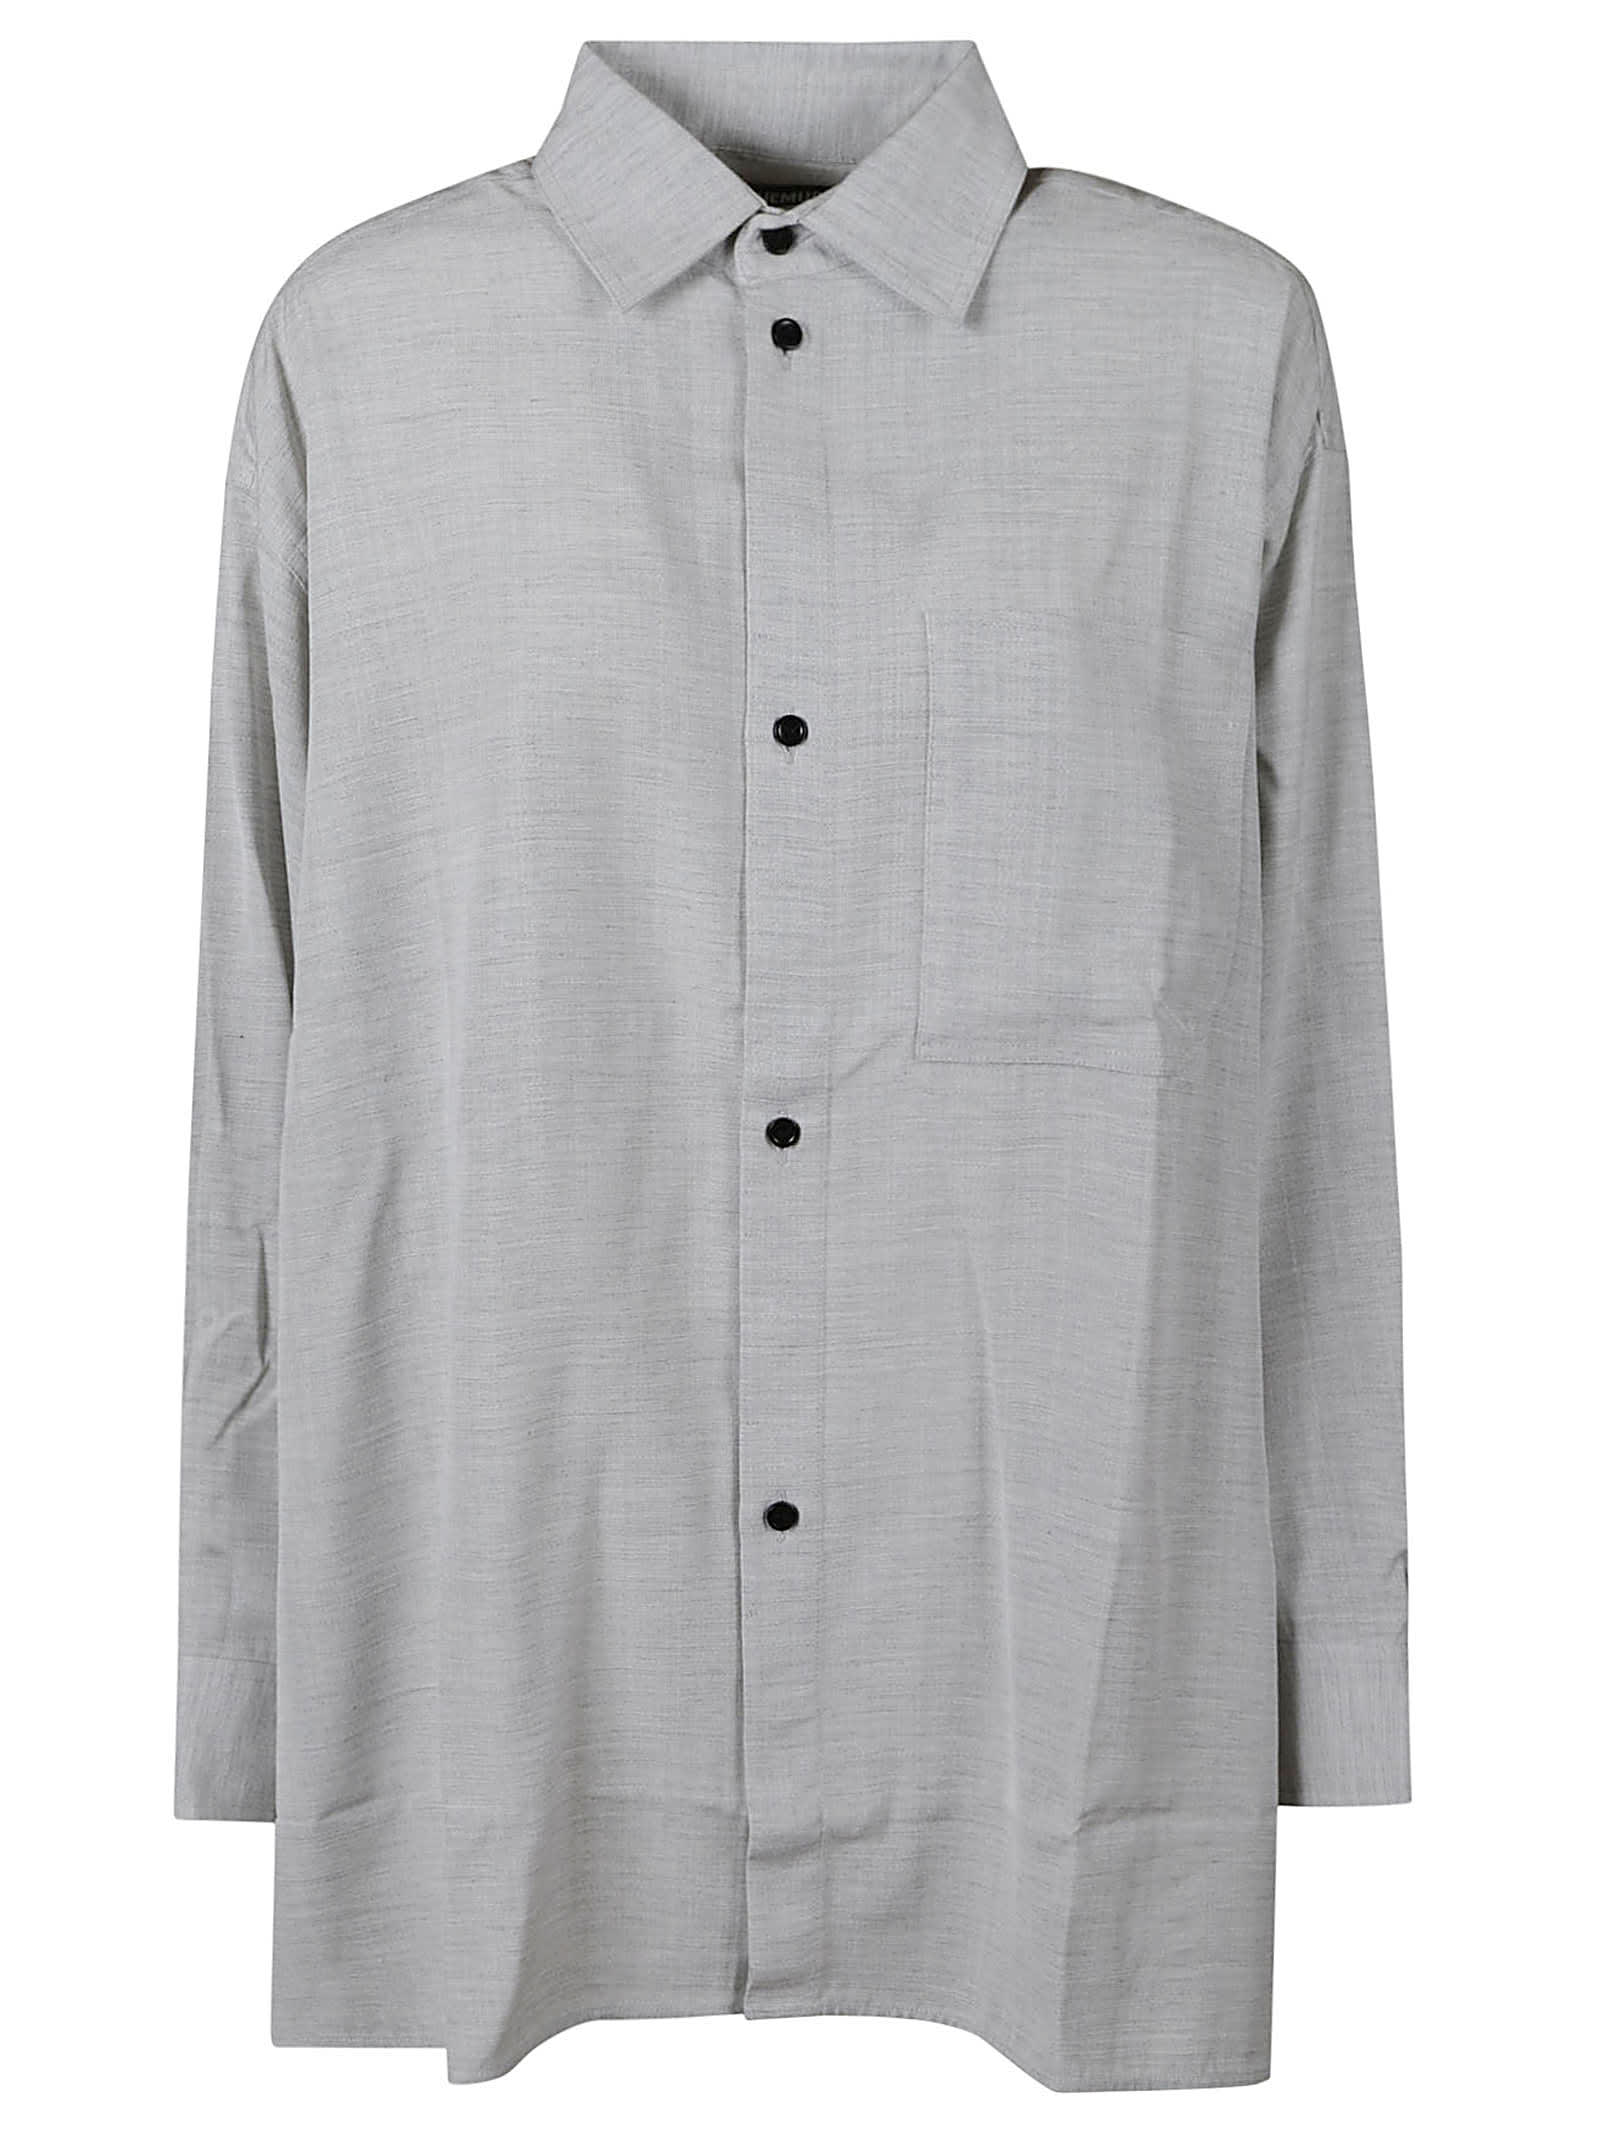 Patched Pocket Plain Shirt